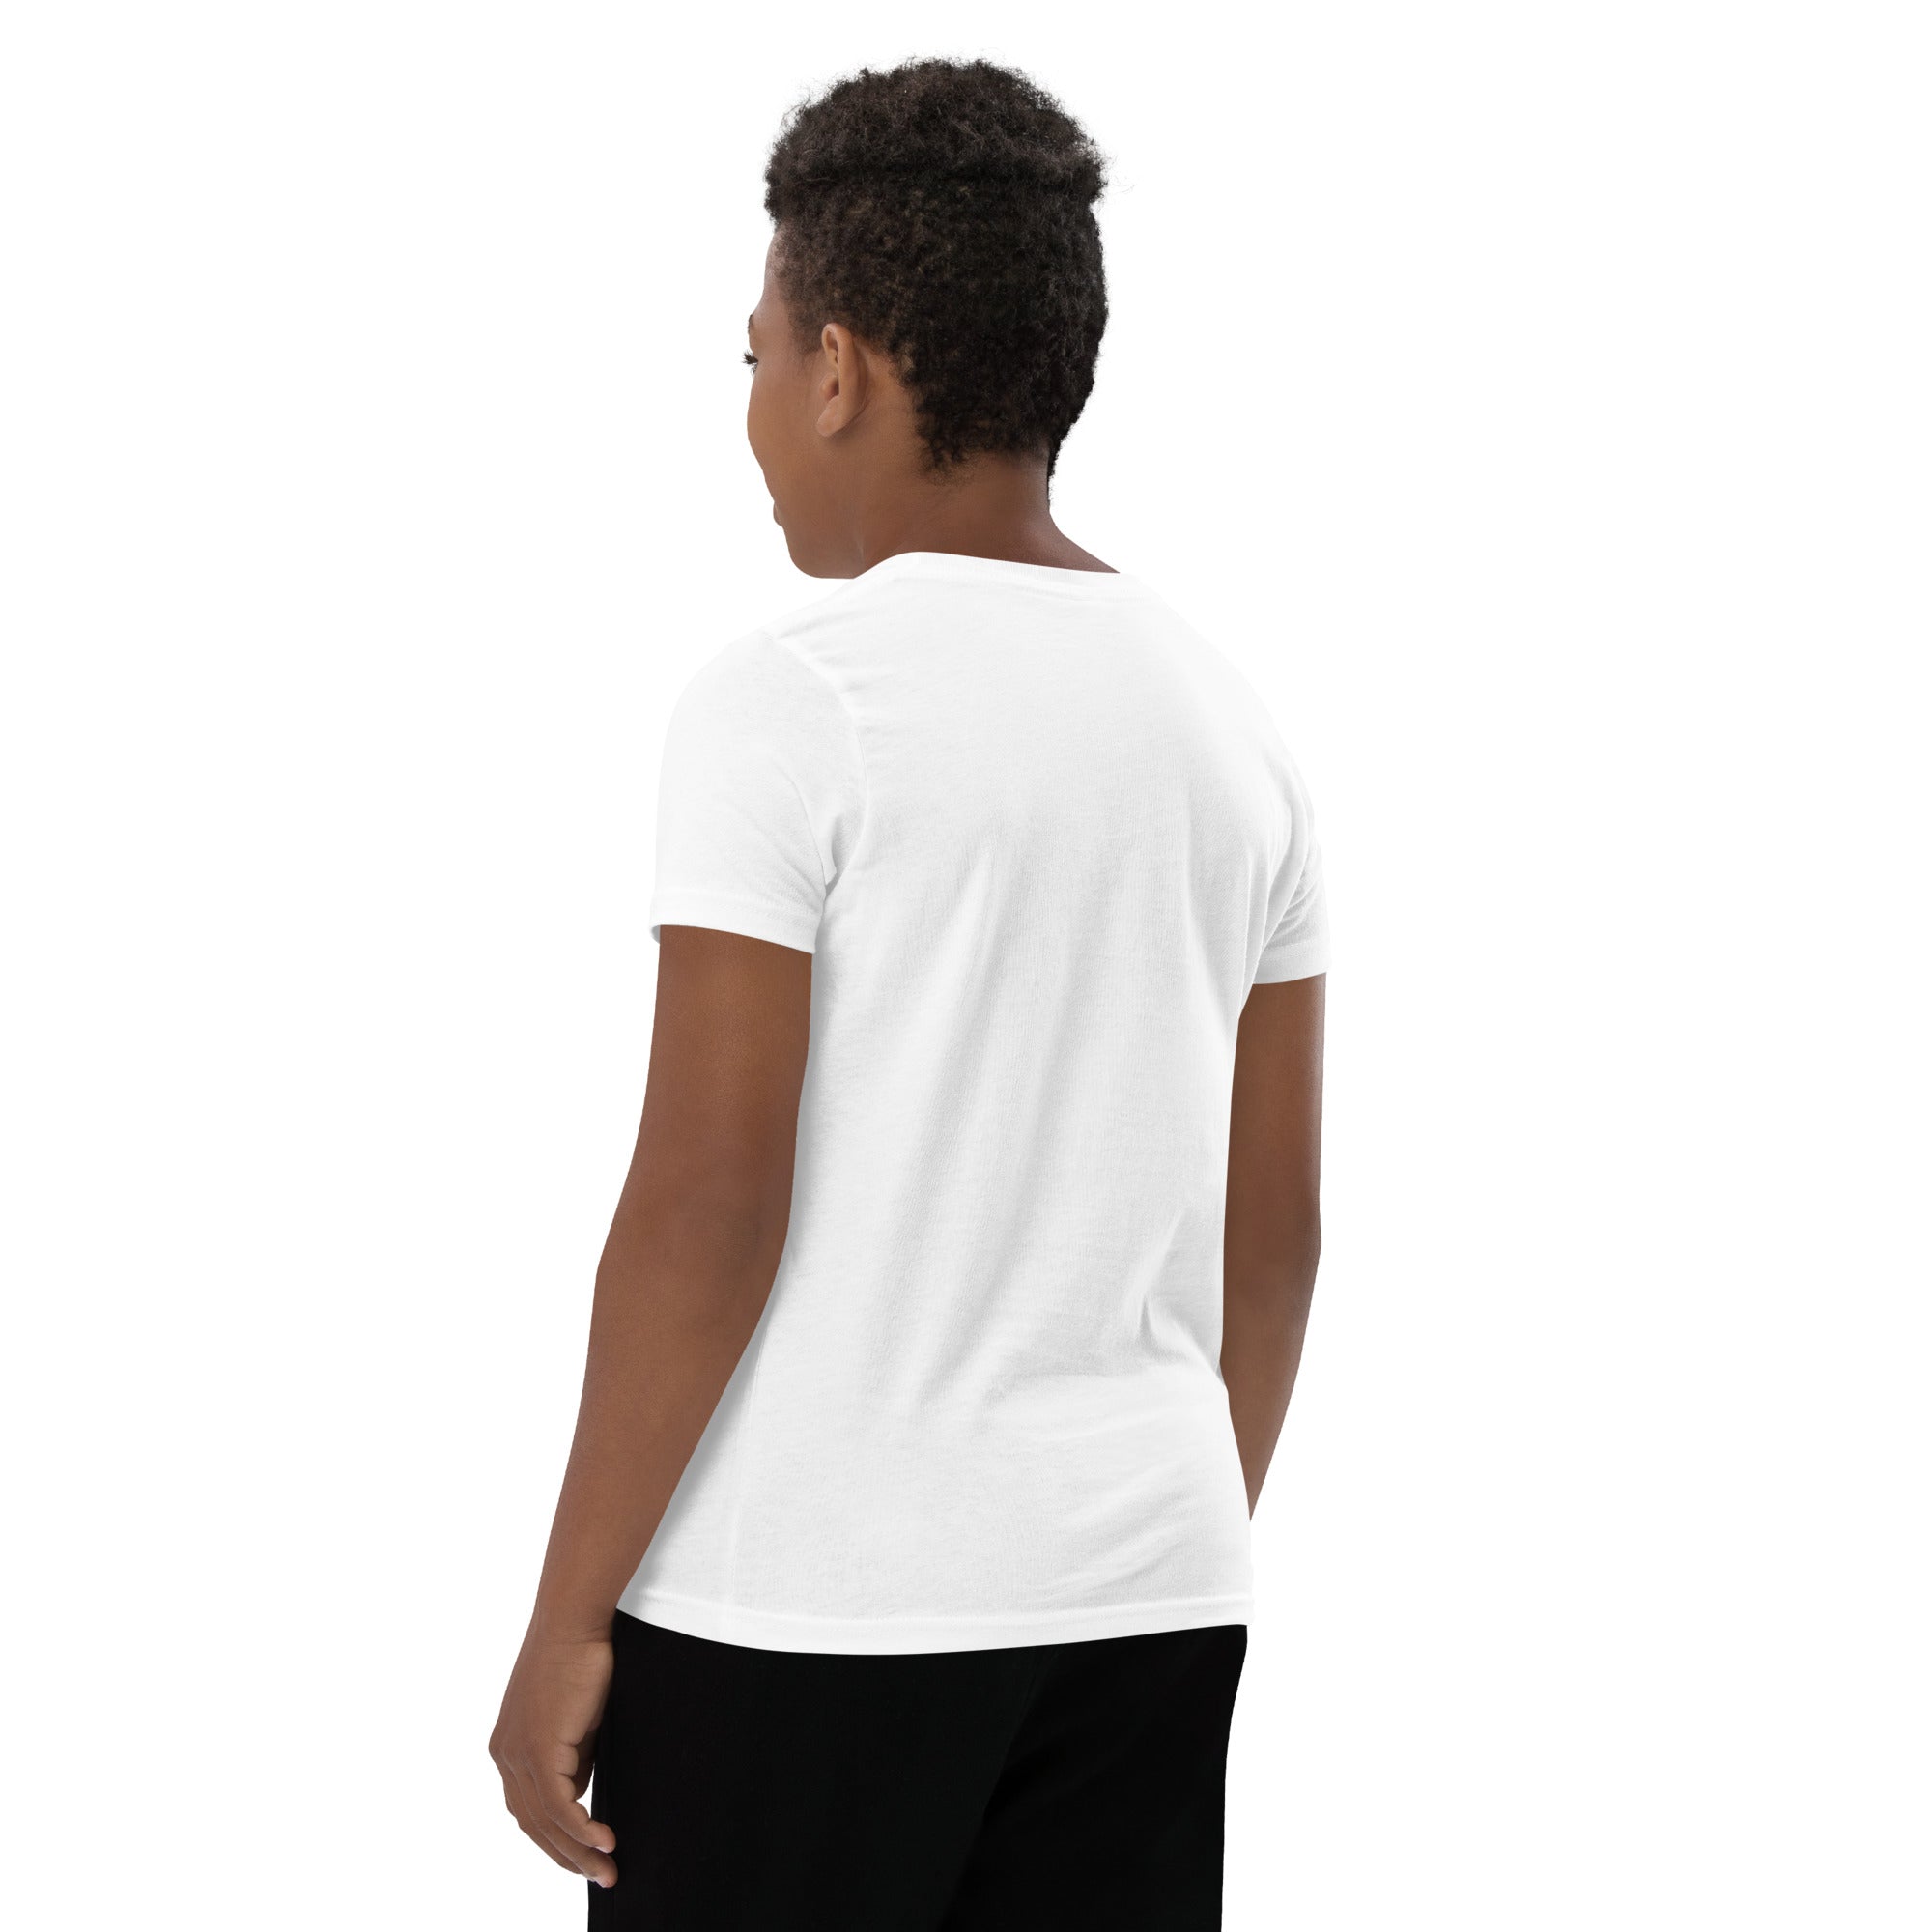 Carrollwood Logo R/B - White Youth Short Sleeve T-Shirt